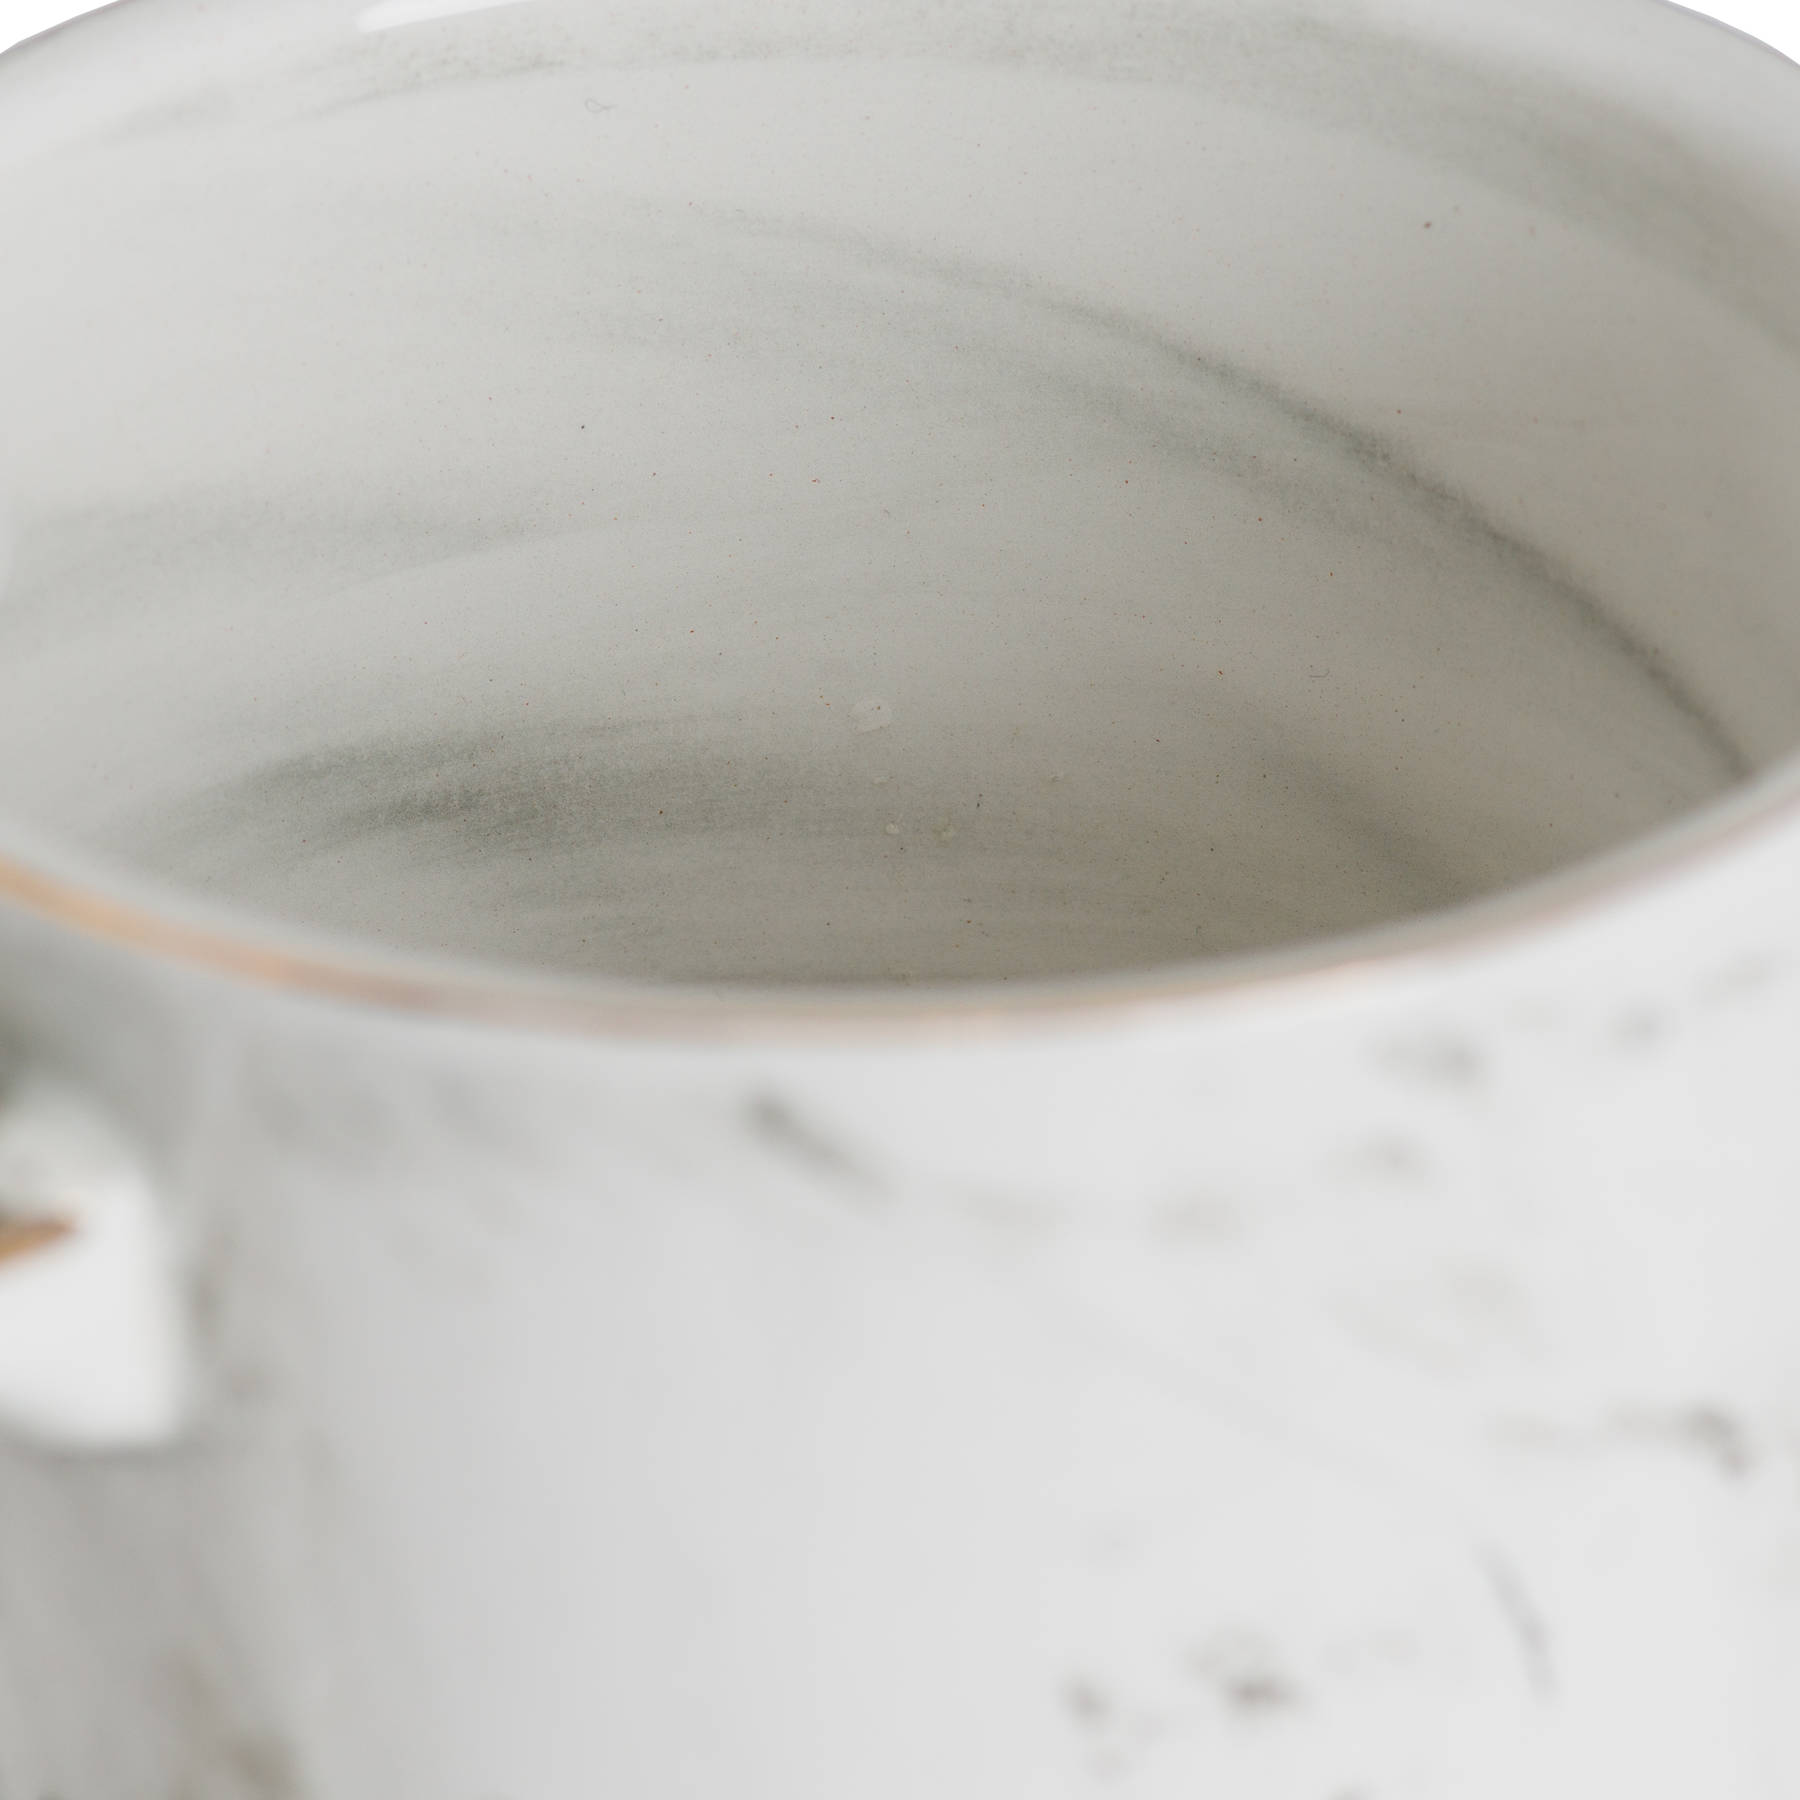 Marble Ceramic Mug - Image 2